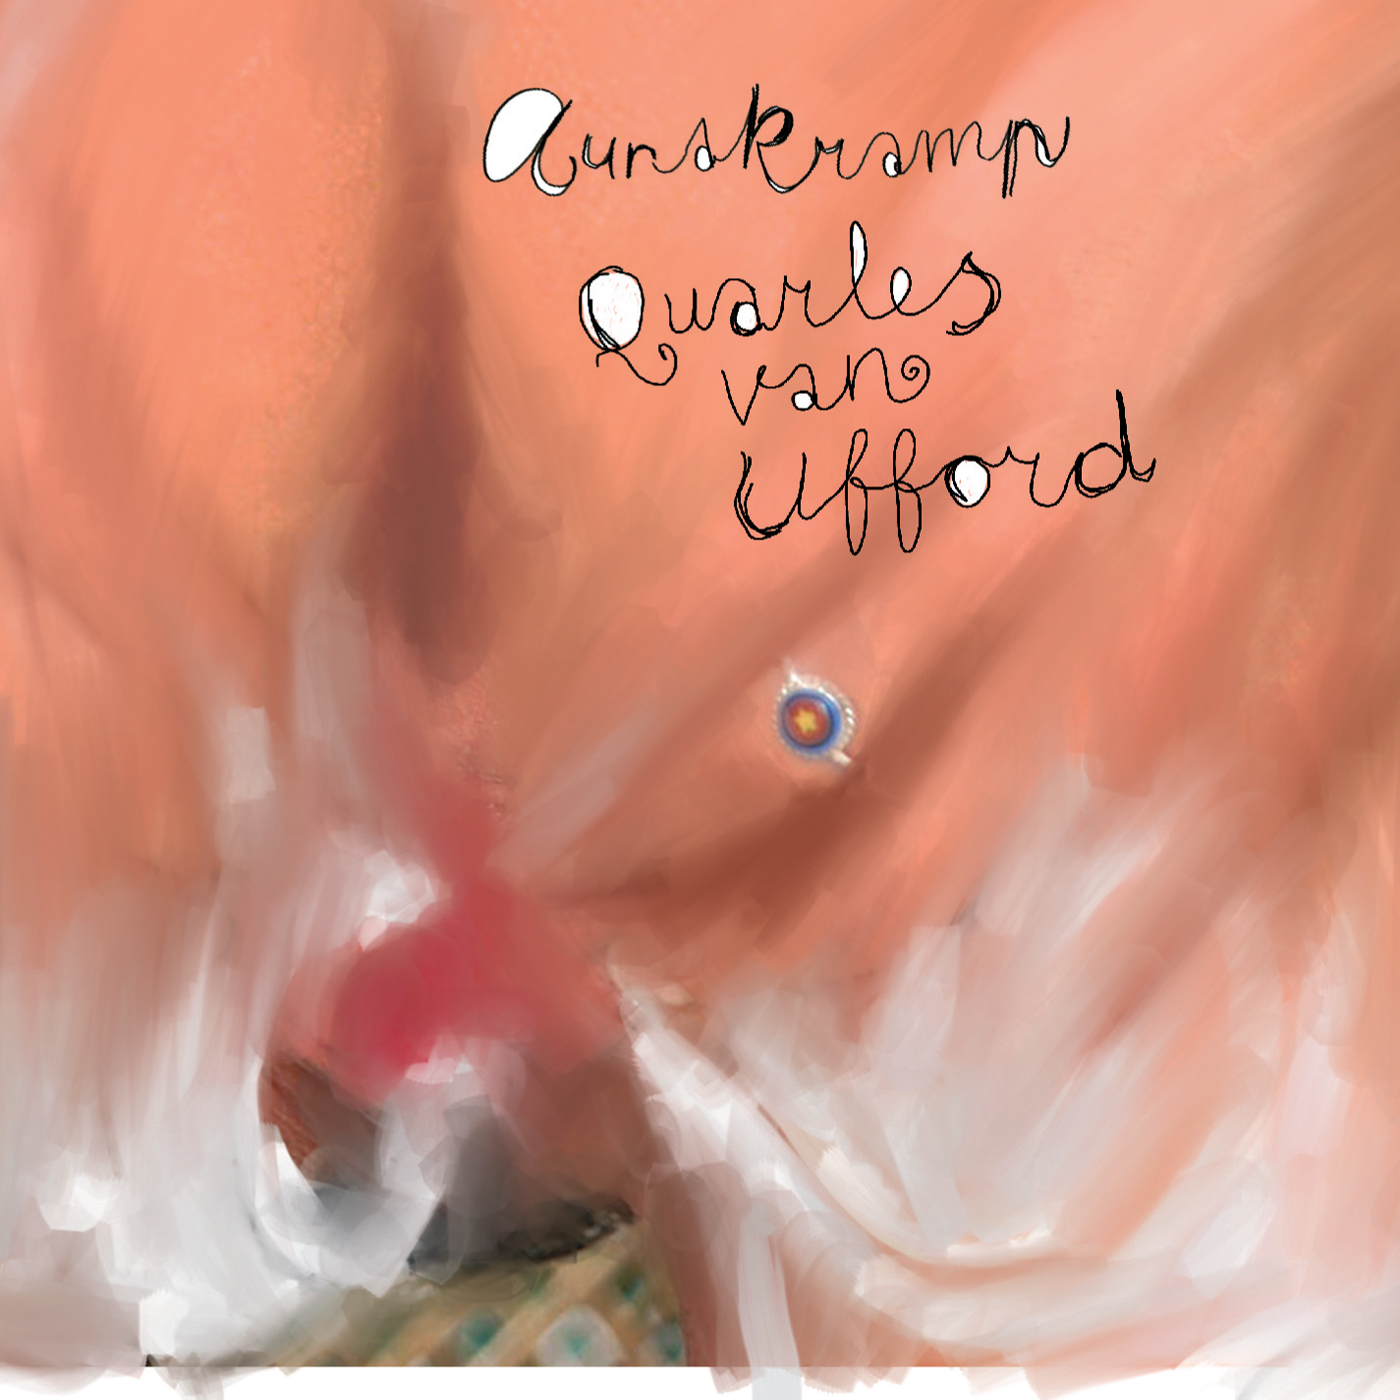 NM018: quarles van ufford - aurakramp